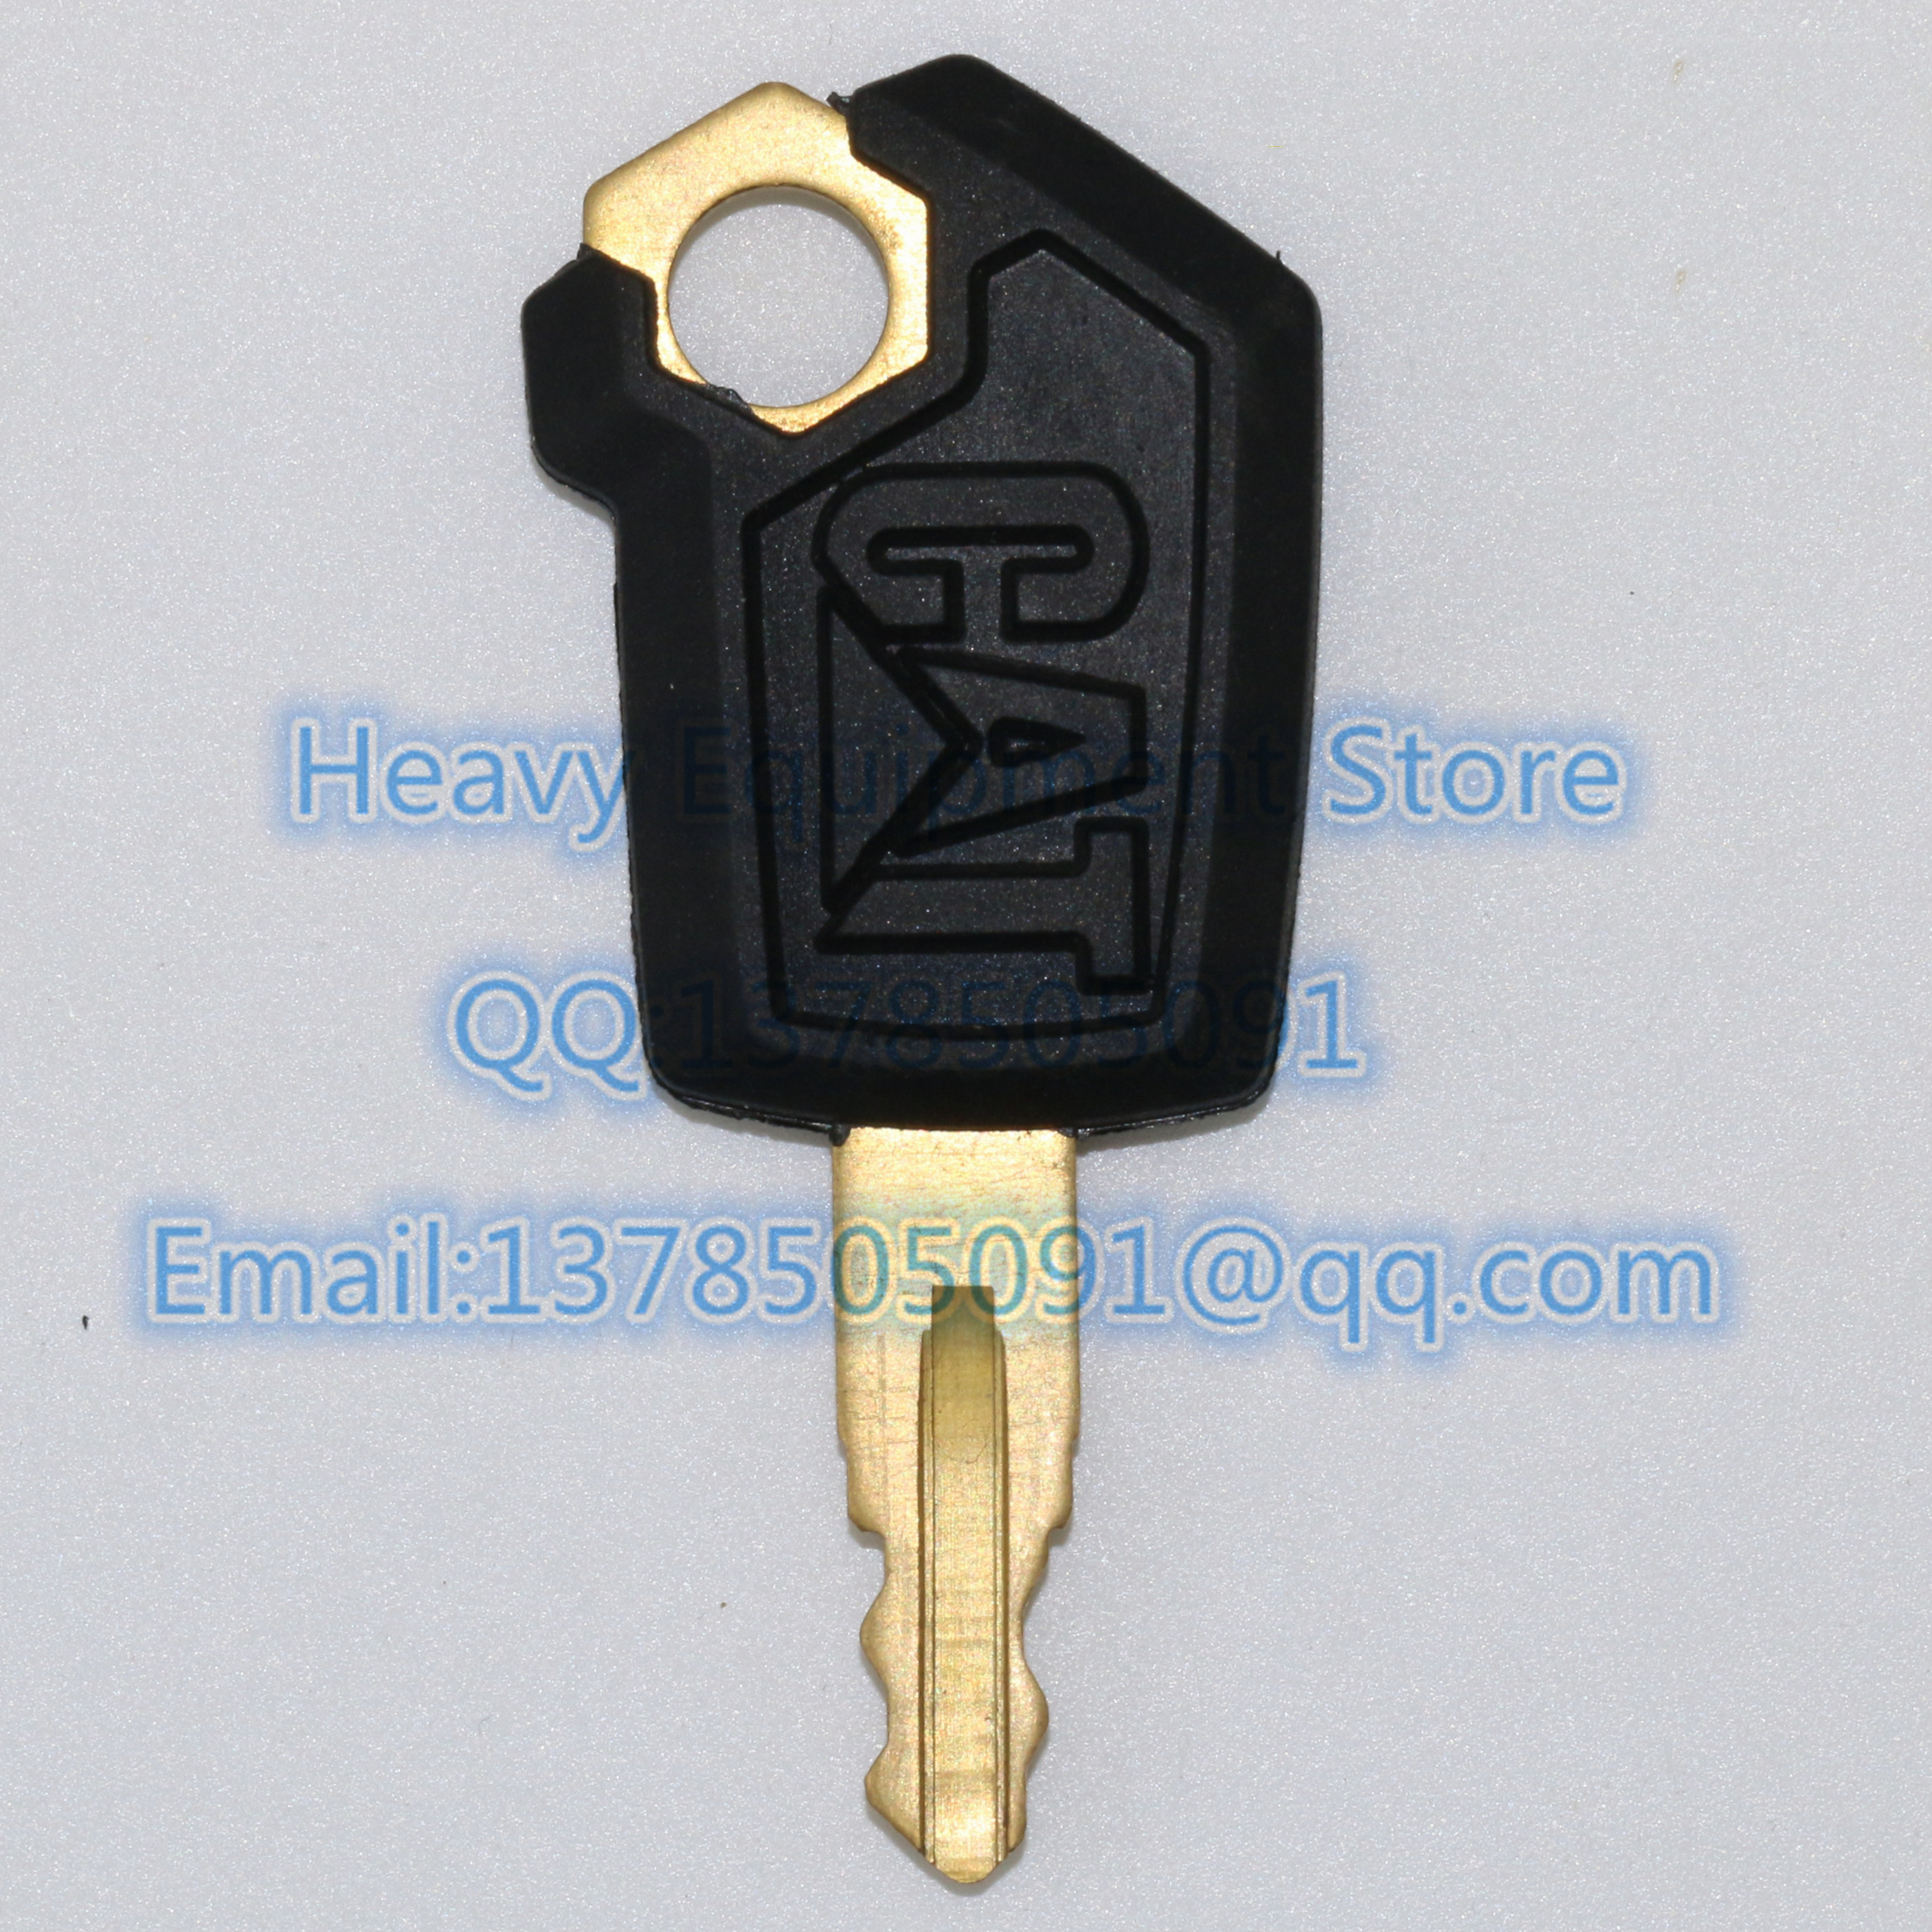 1 PC Key For Caterpillar 5P8500 CAT Heavy Equipment Ignition Loader Dozer Metal & Plastic Black & Gold